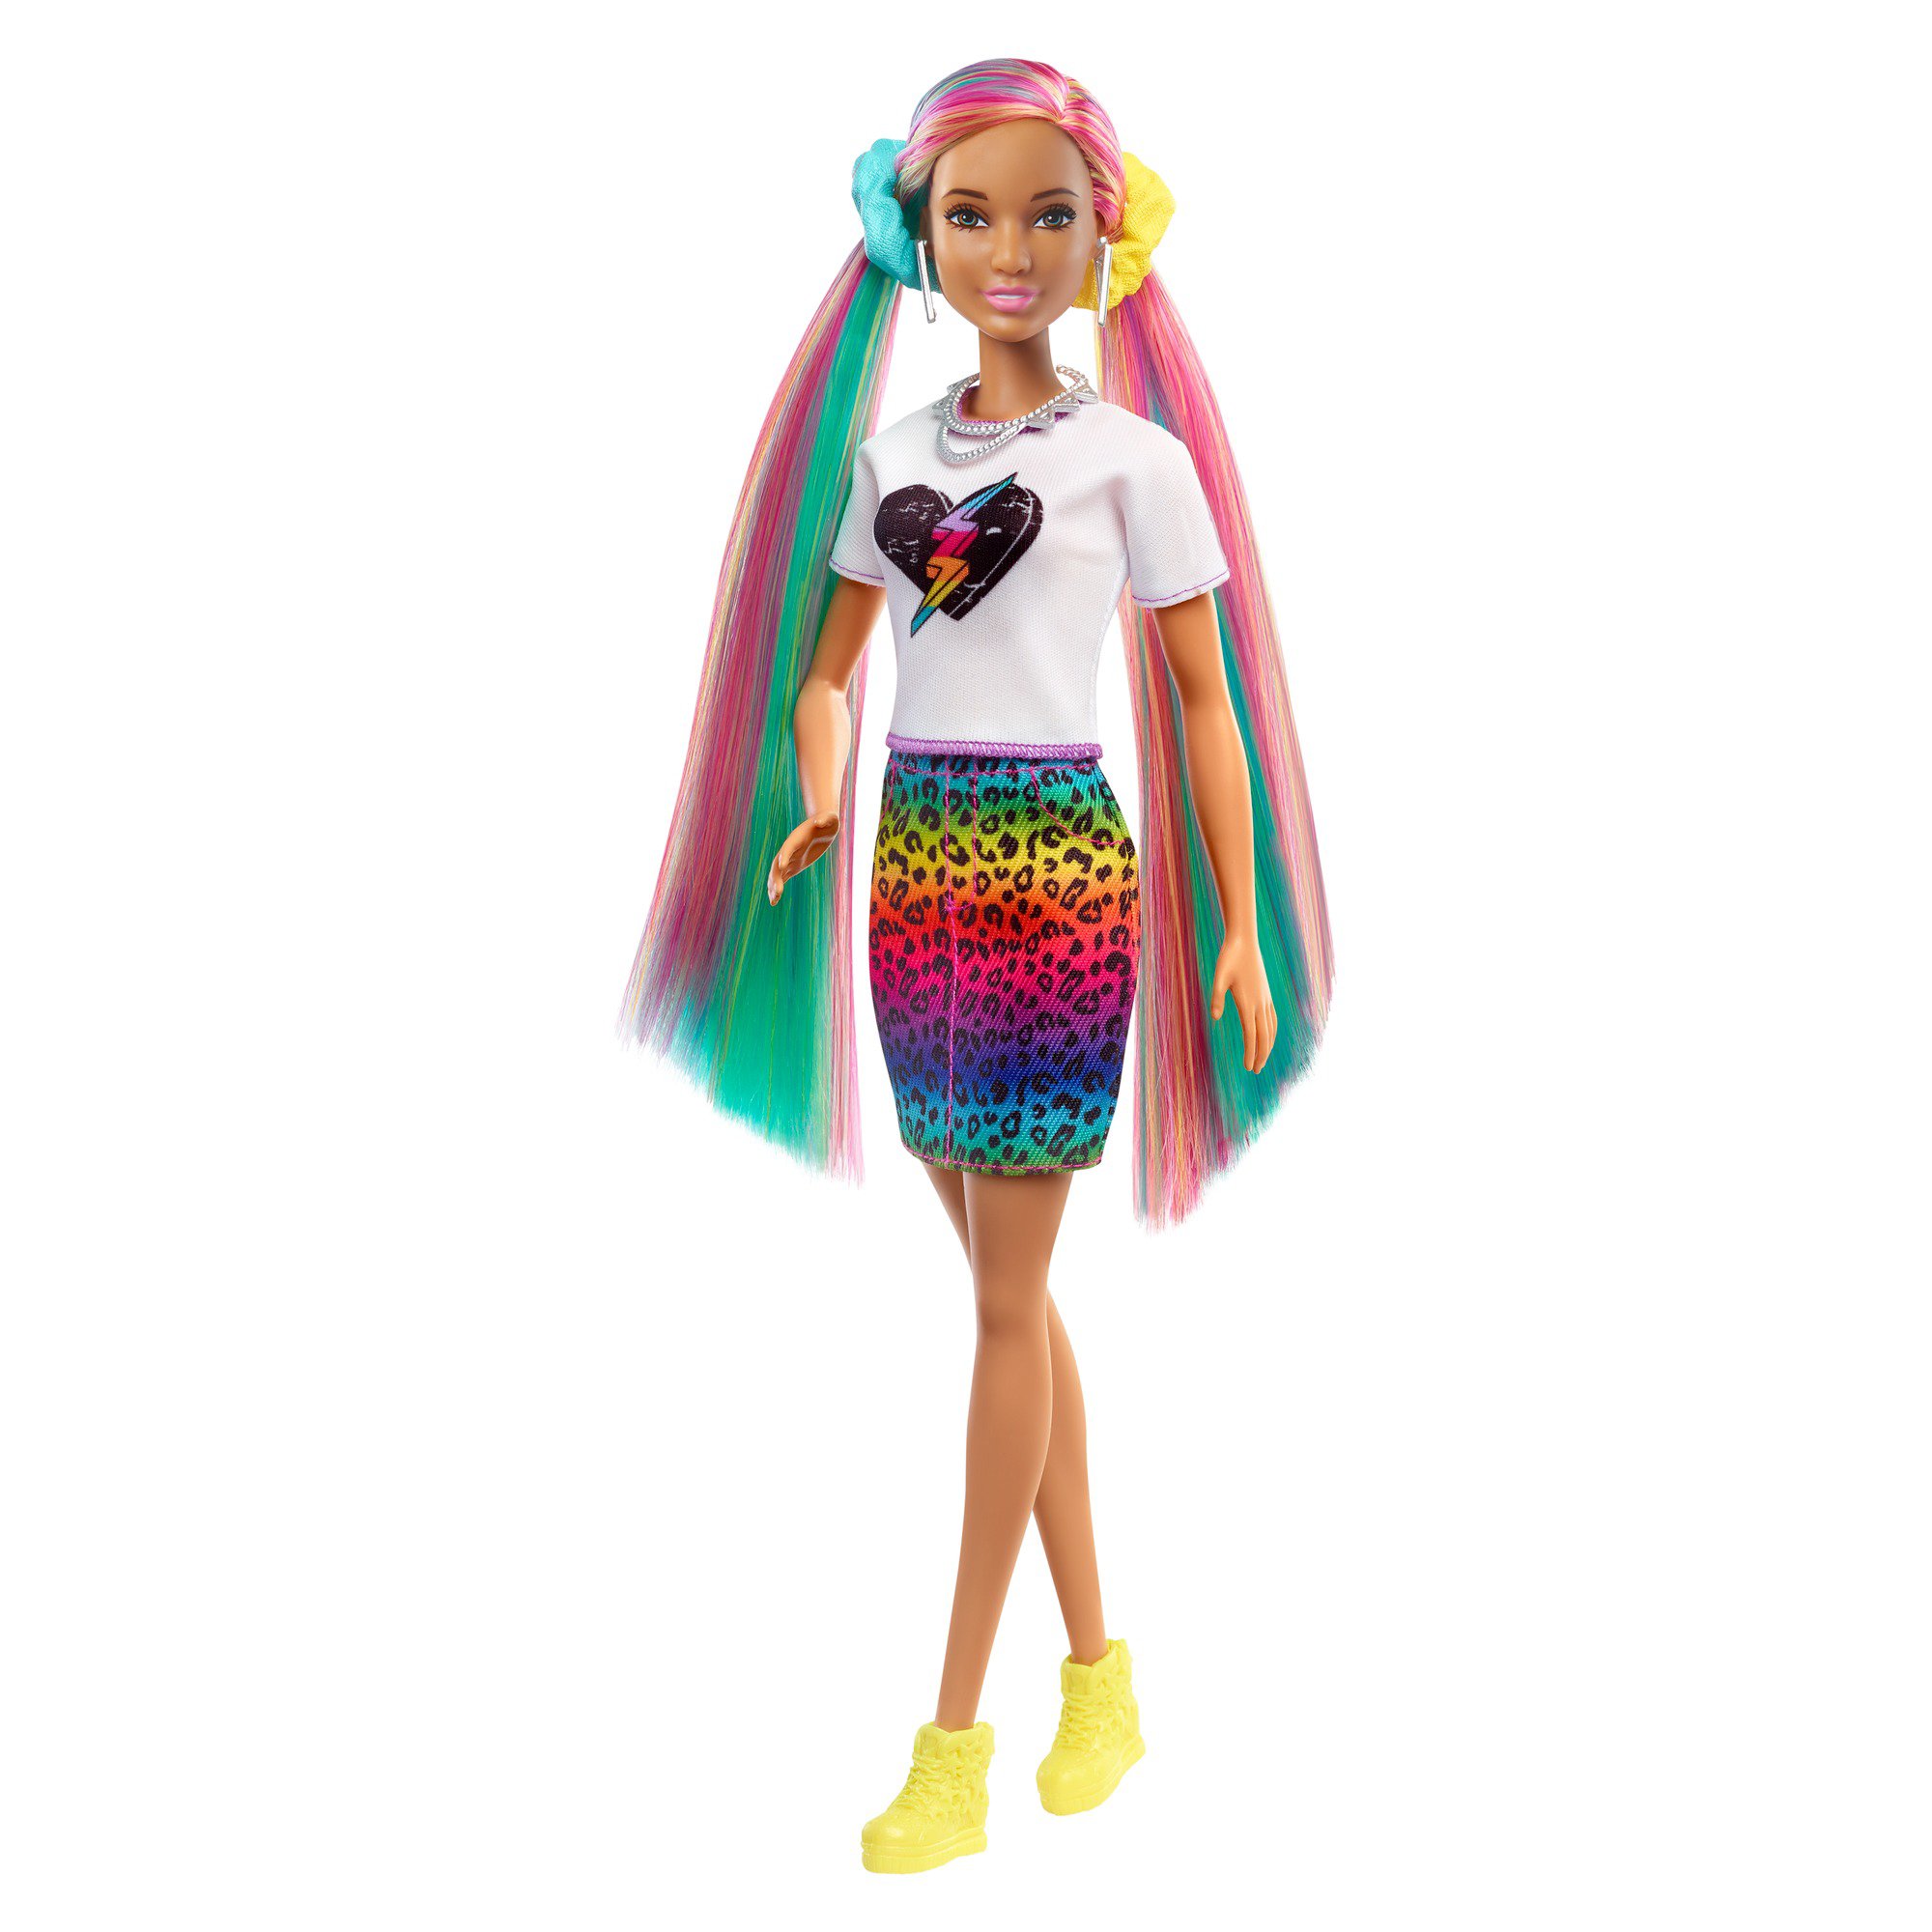 Barbie Leopard Rainbow Hair Doll - Shop Action Figures & Dolls at H-E-B